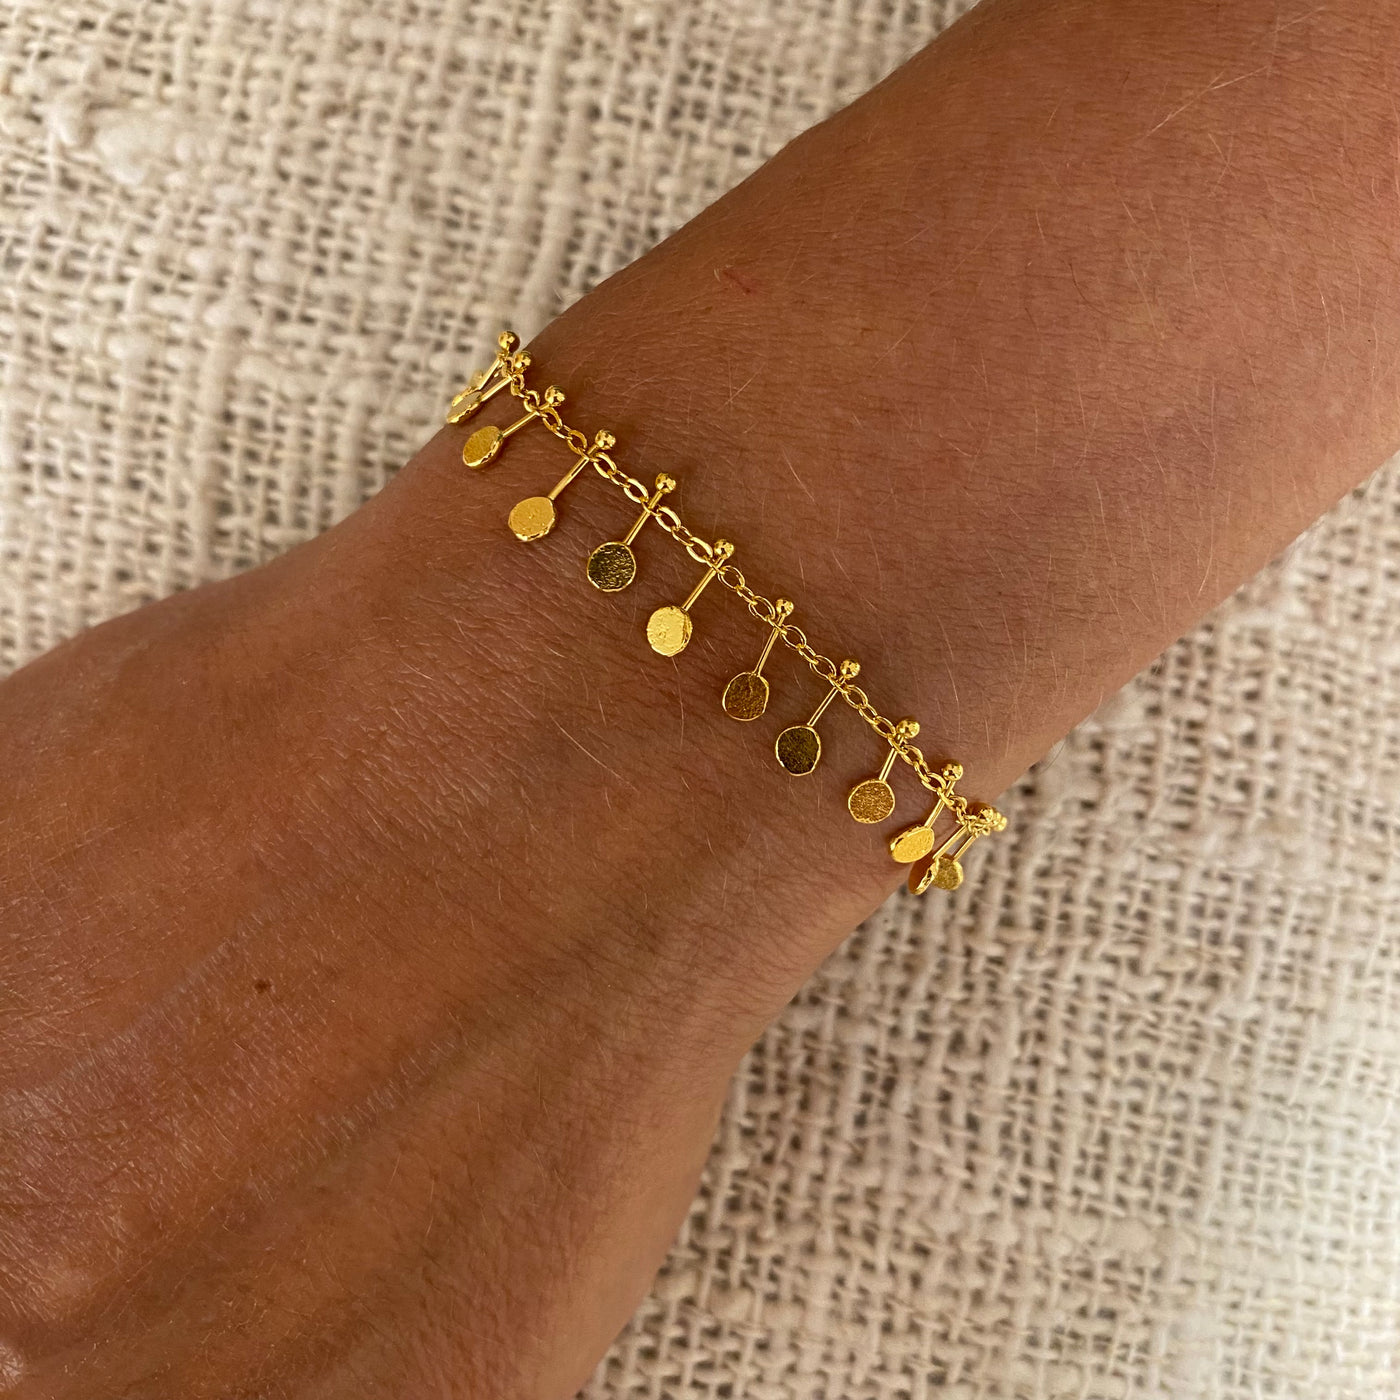 INDIA - Gold plated bracelet